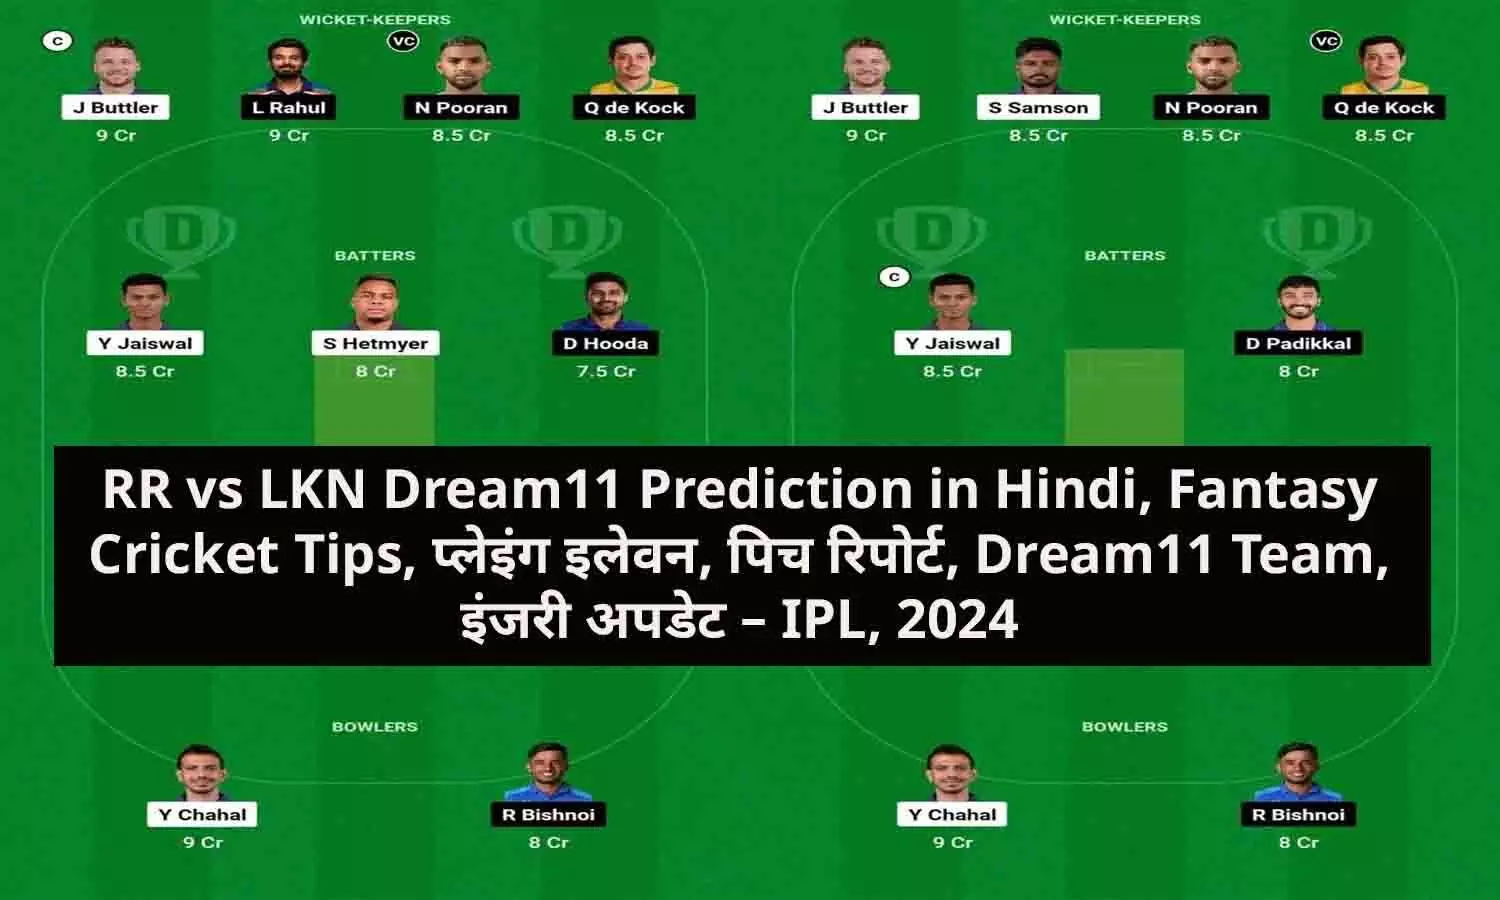 RR vs LSG Dream11 Prediction in Hindi, Fantasy Cricket, Pitch Report, 4th Match, Dream11 Team, T20 Match, Indian Premier League 2024